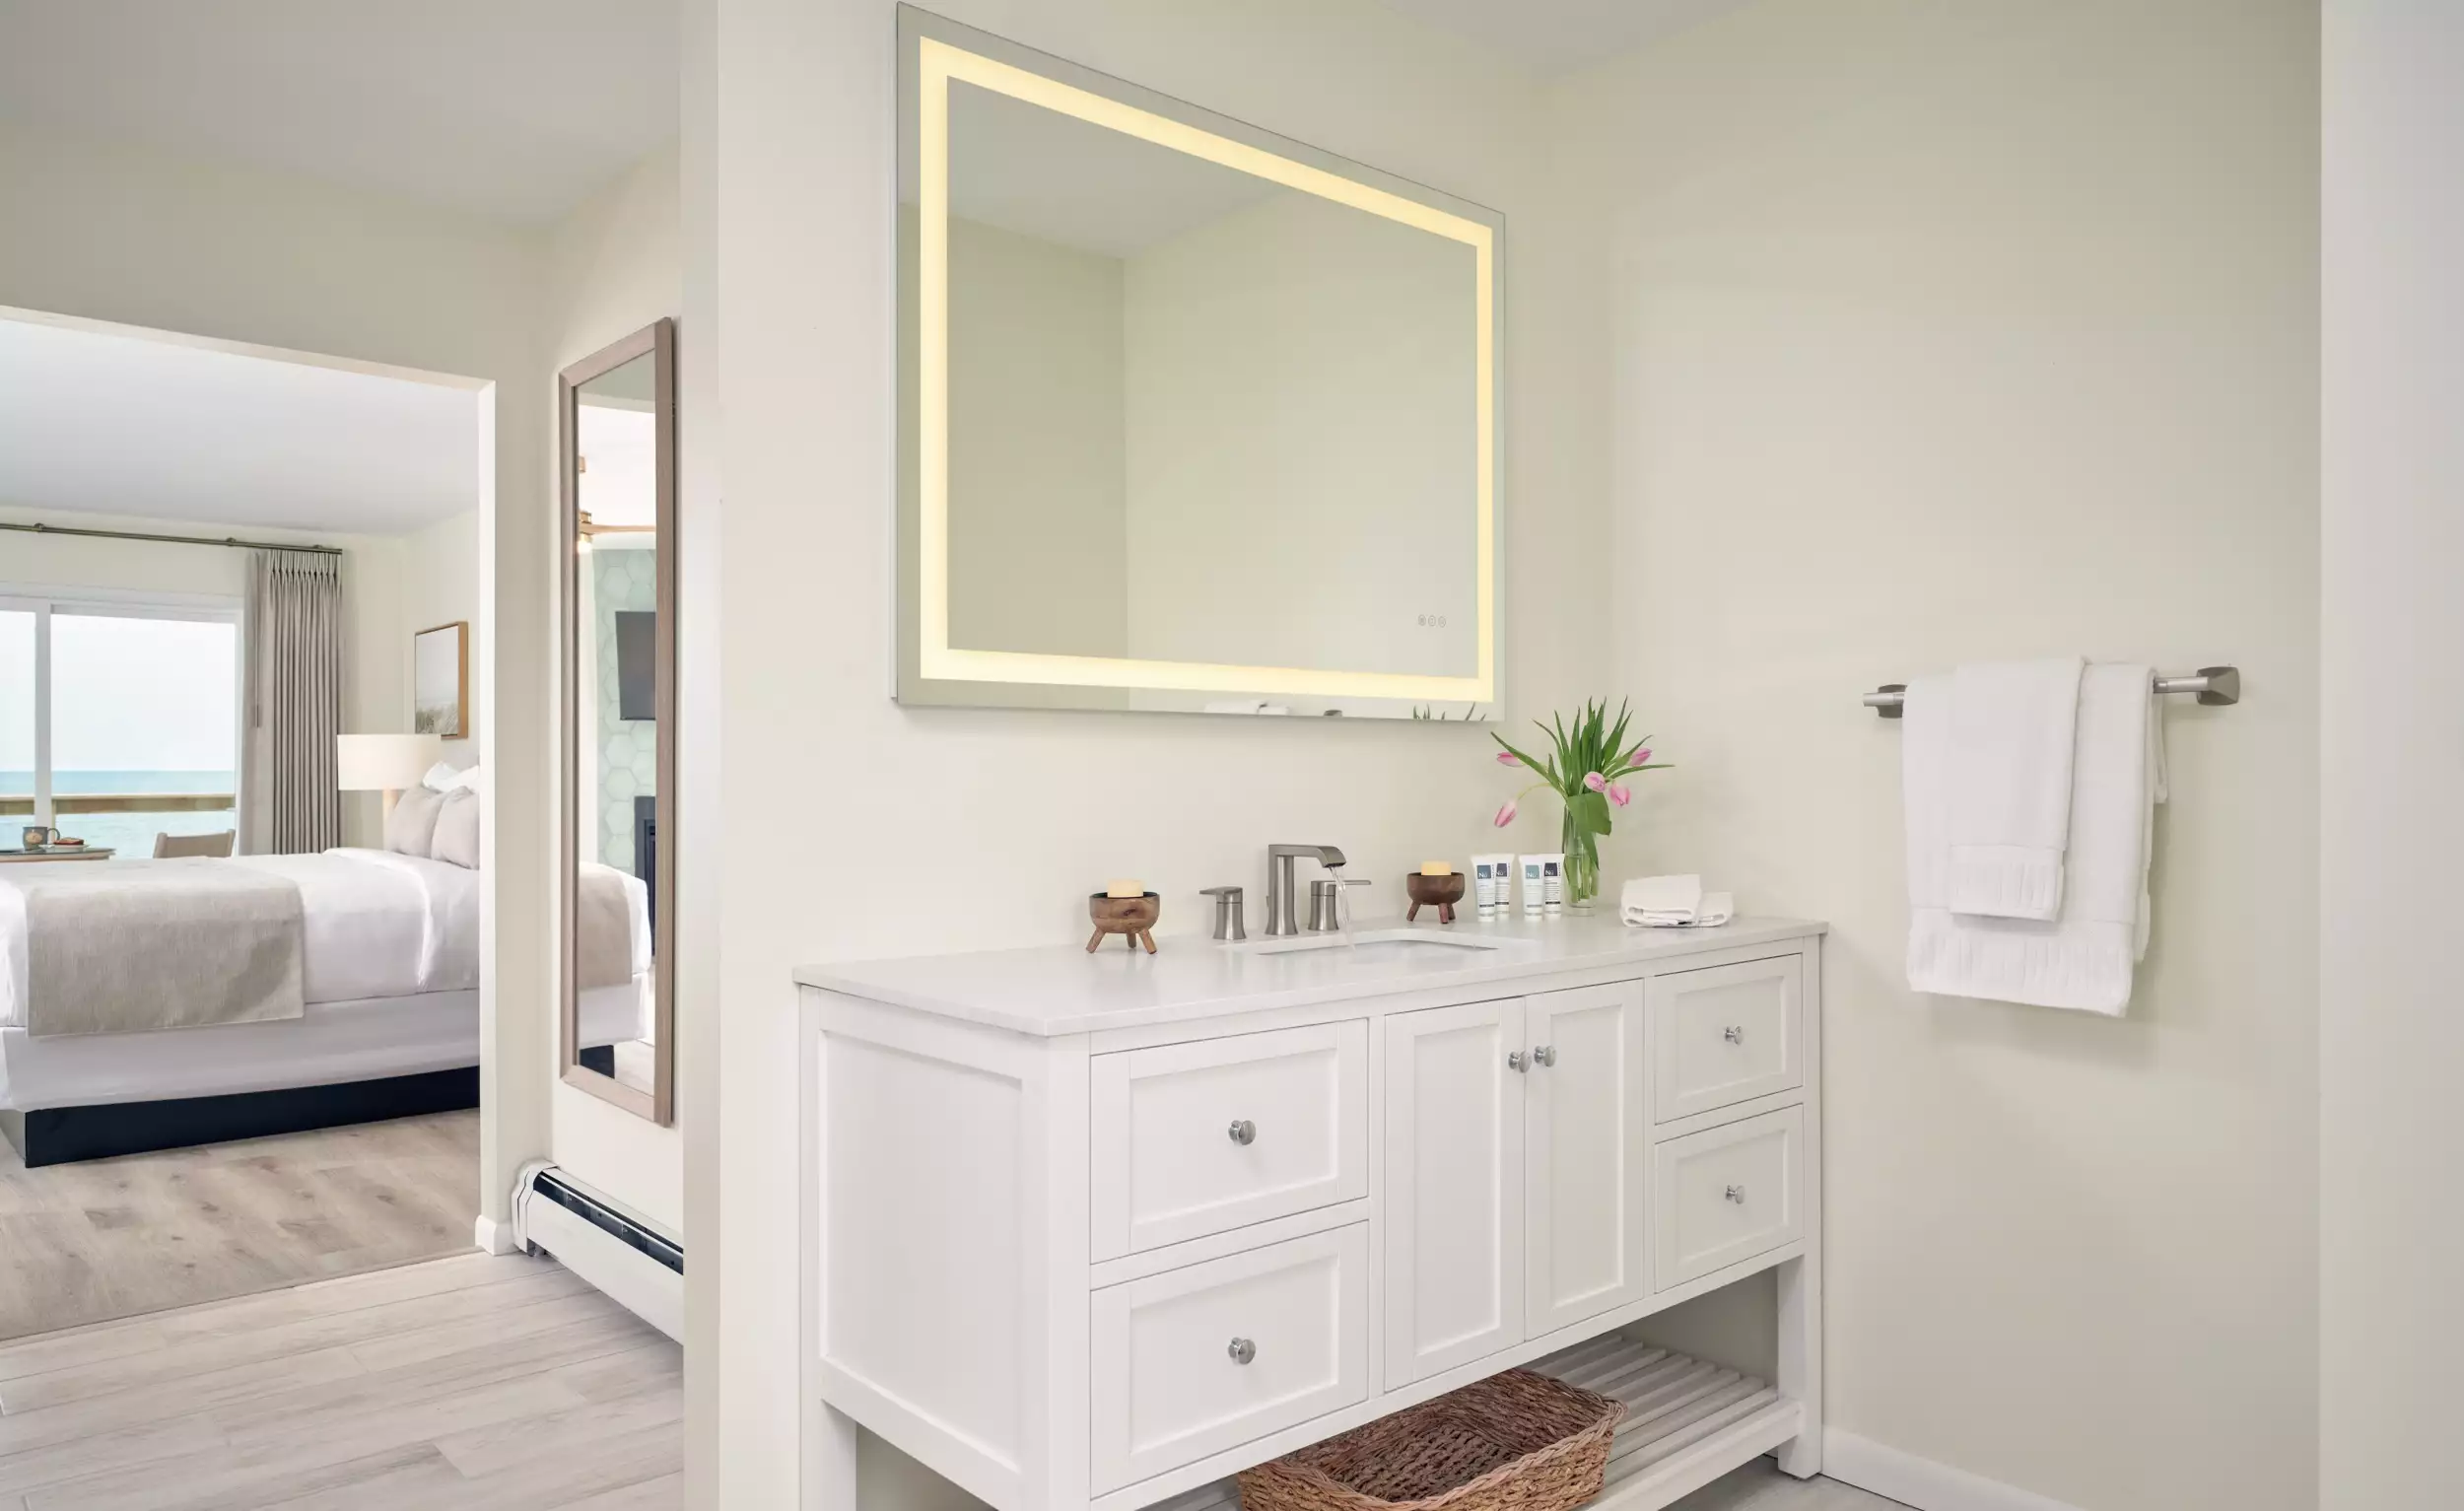 Spacious bathroom vanity with lighted makeup mirror